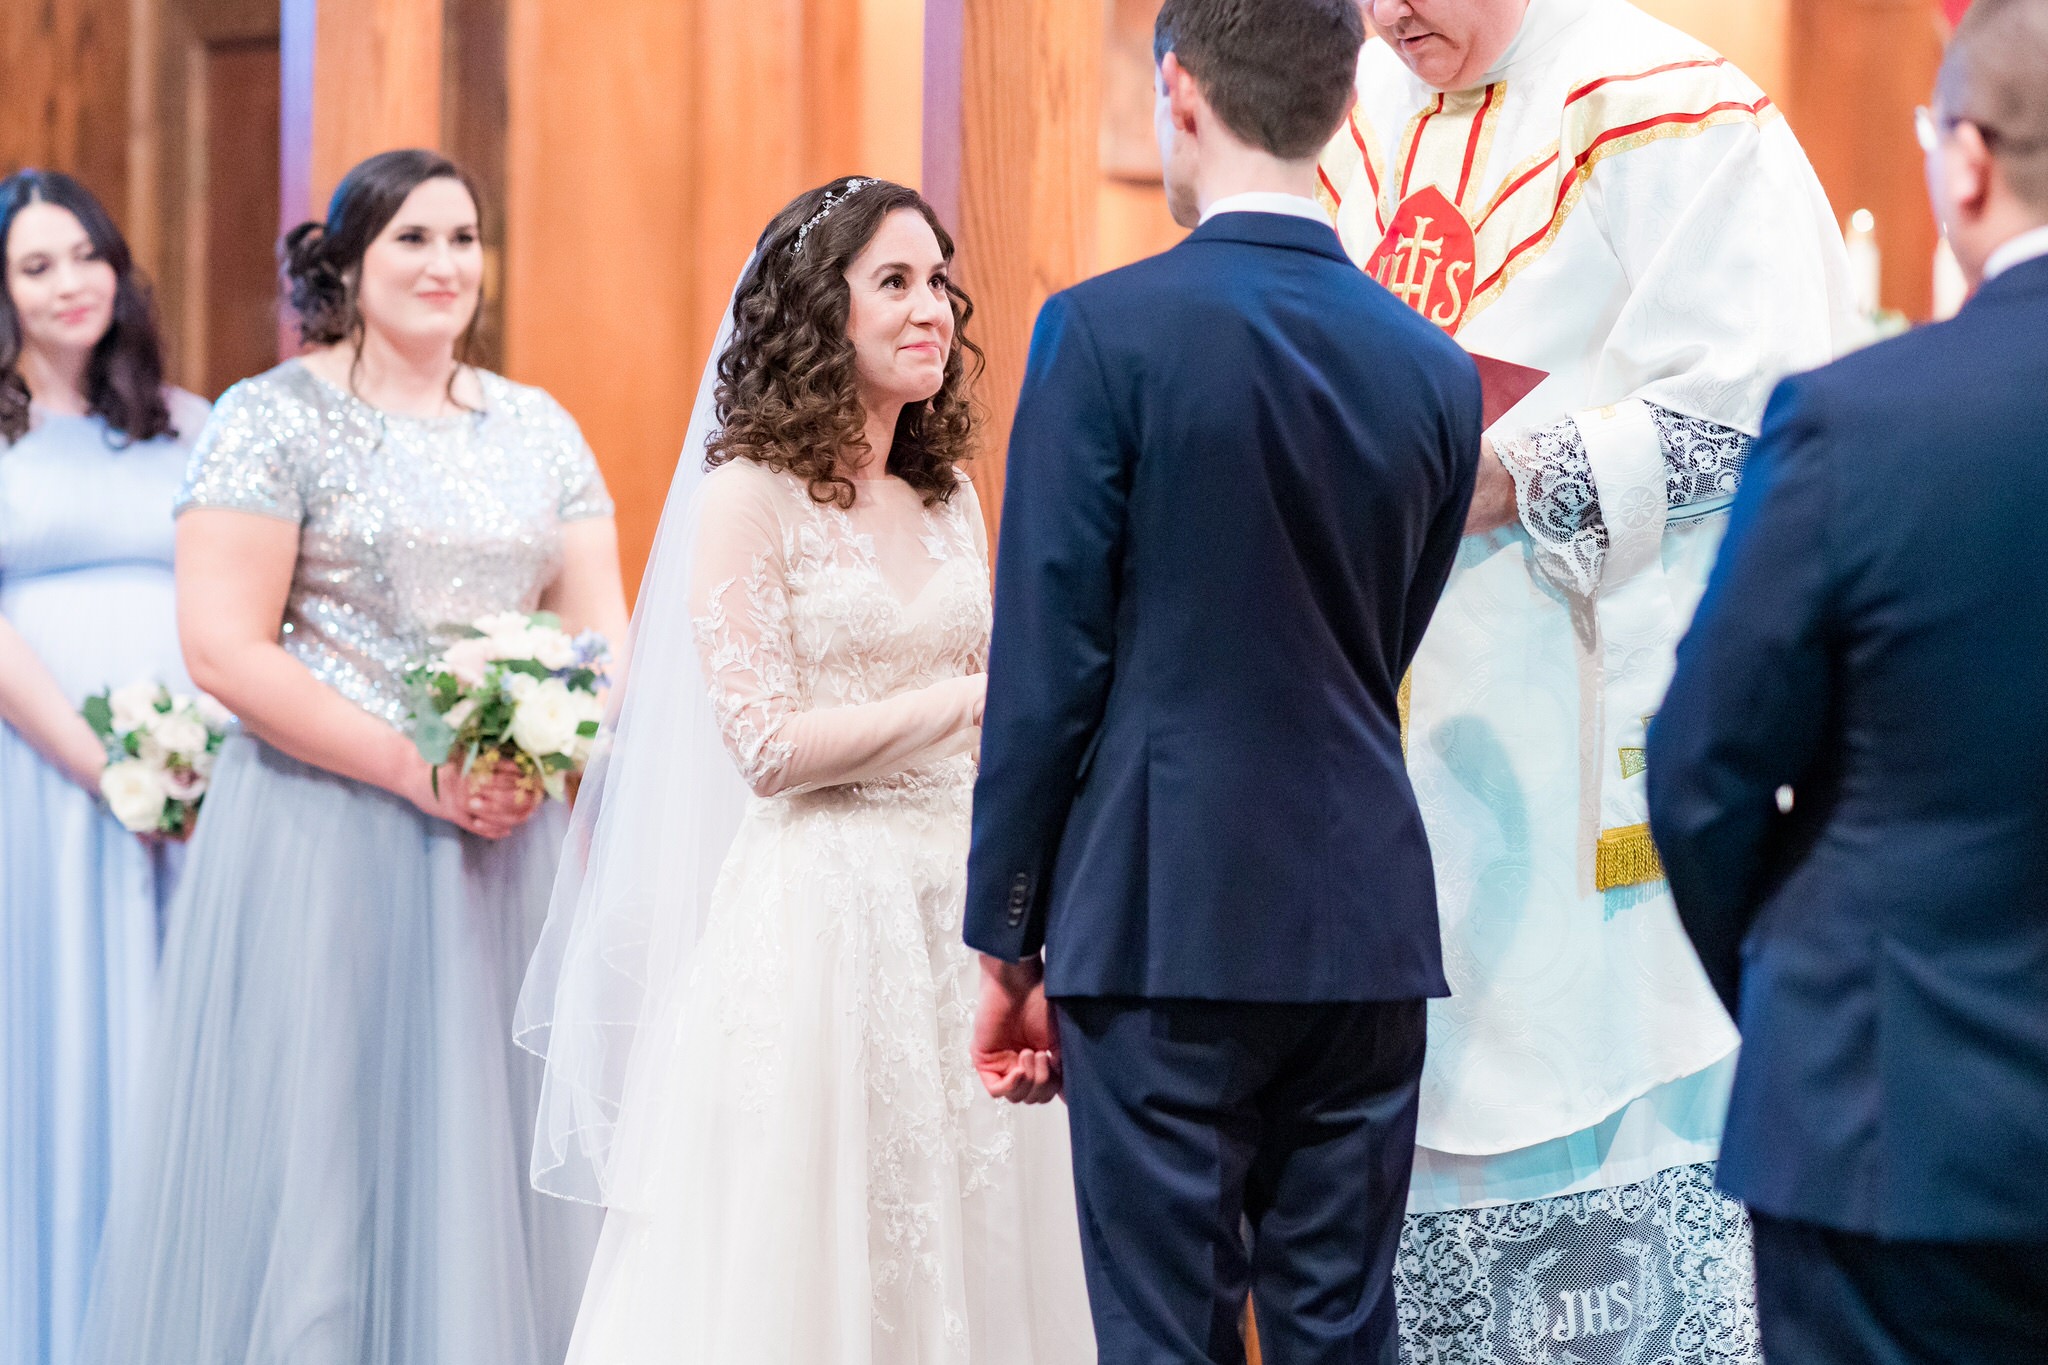 An intimate wedding at Paesanos & Our Lady of the Atonement Catholic Church by Dawn Elizabeth Studios, San Antonio Wedding Photographer